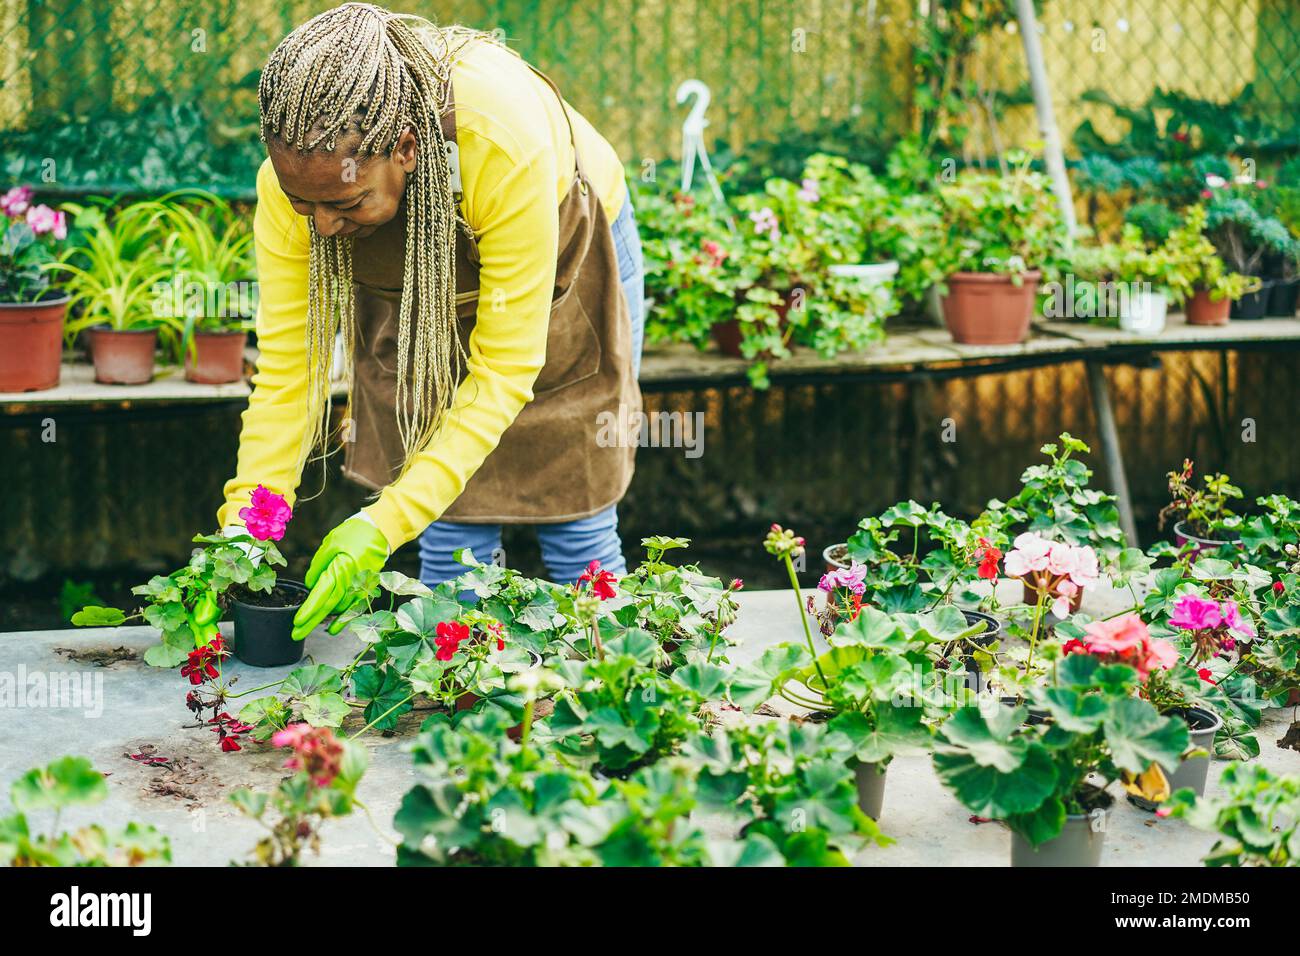 African woman preparing flowers plants inside nursery garden - Focus on face Stock Photo